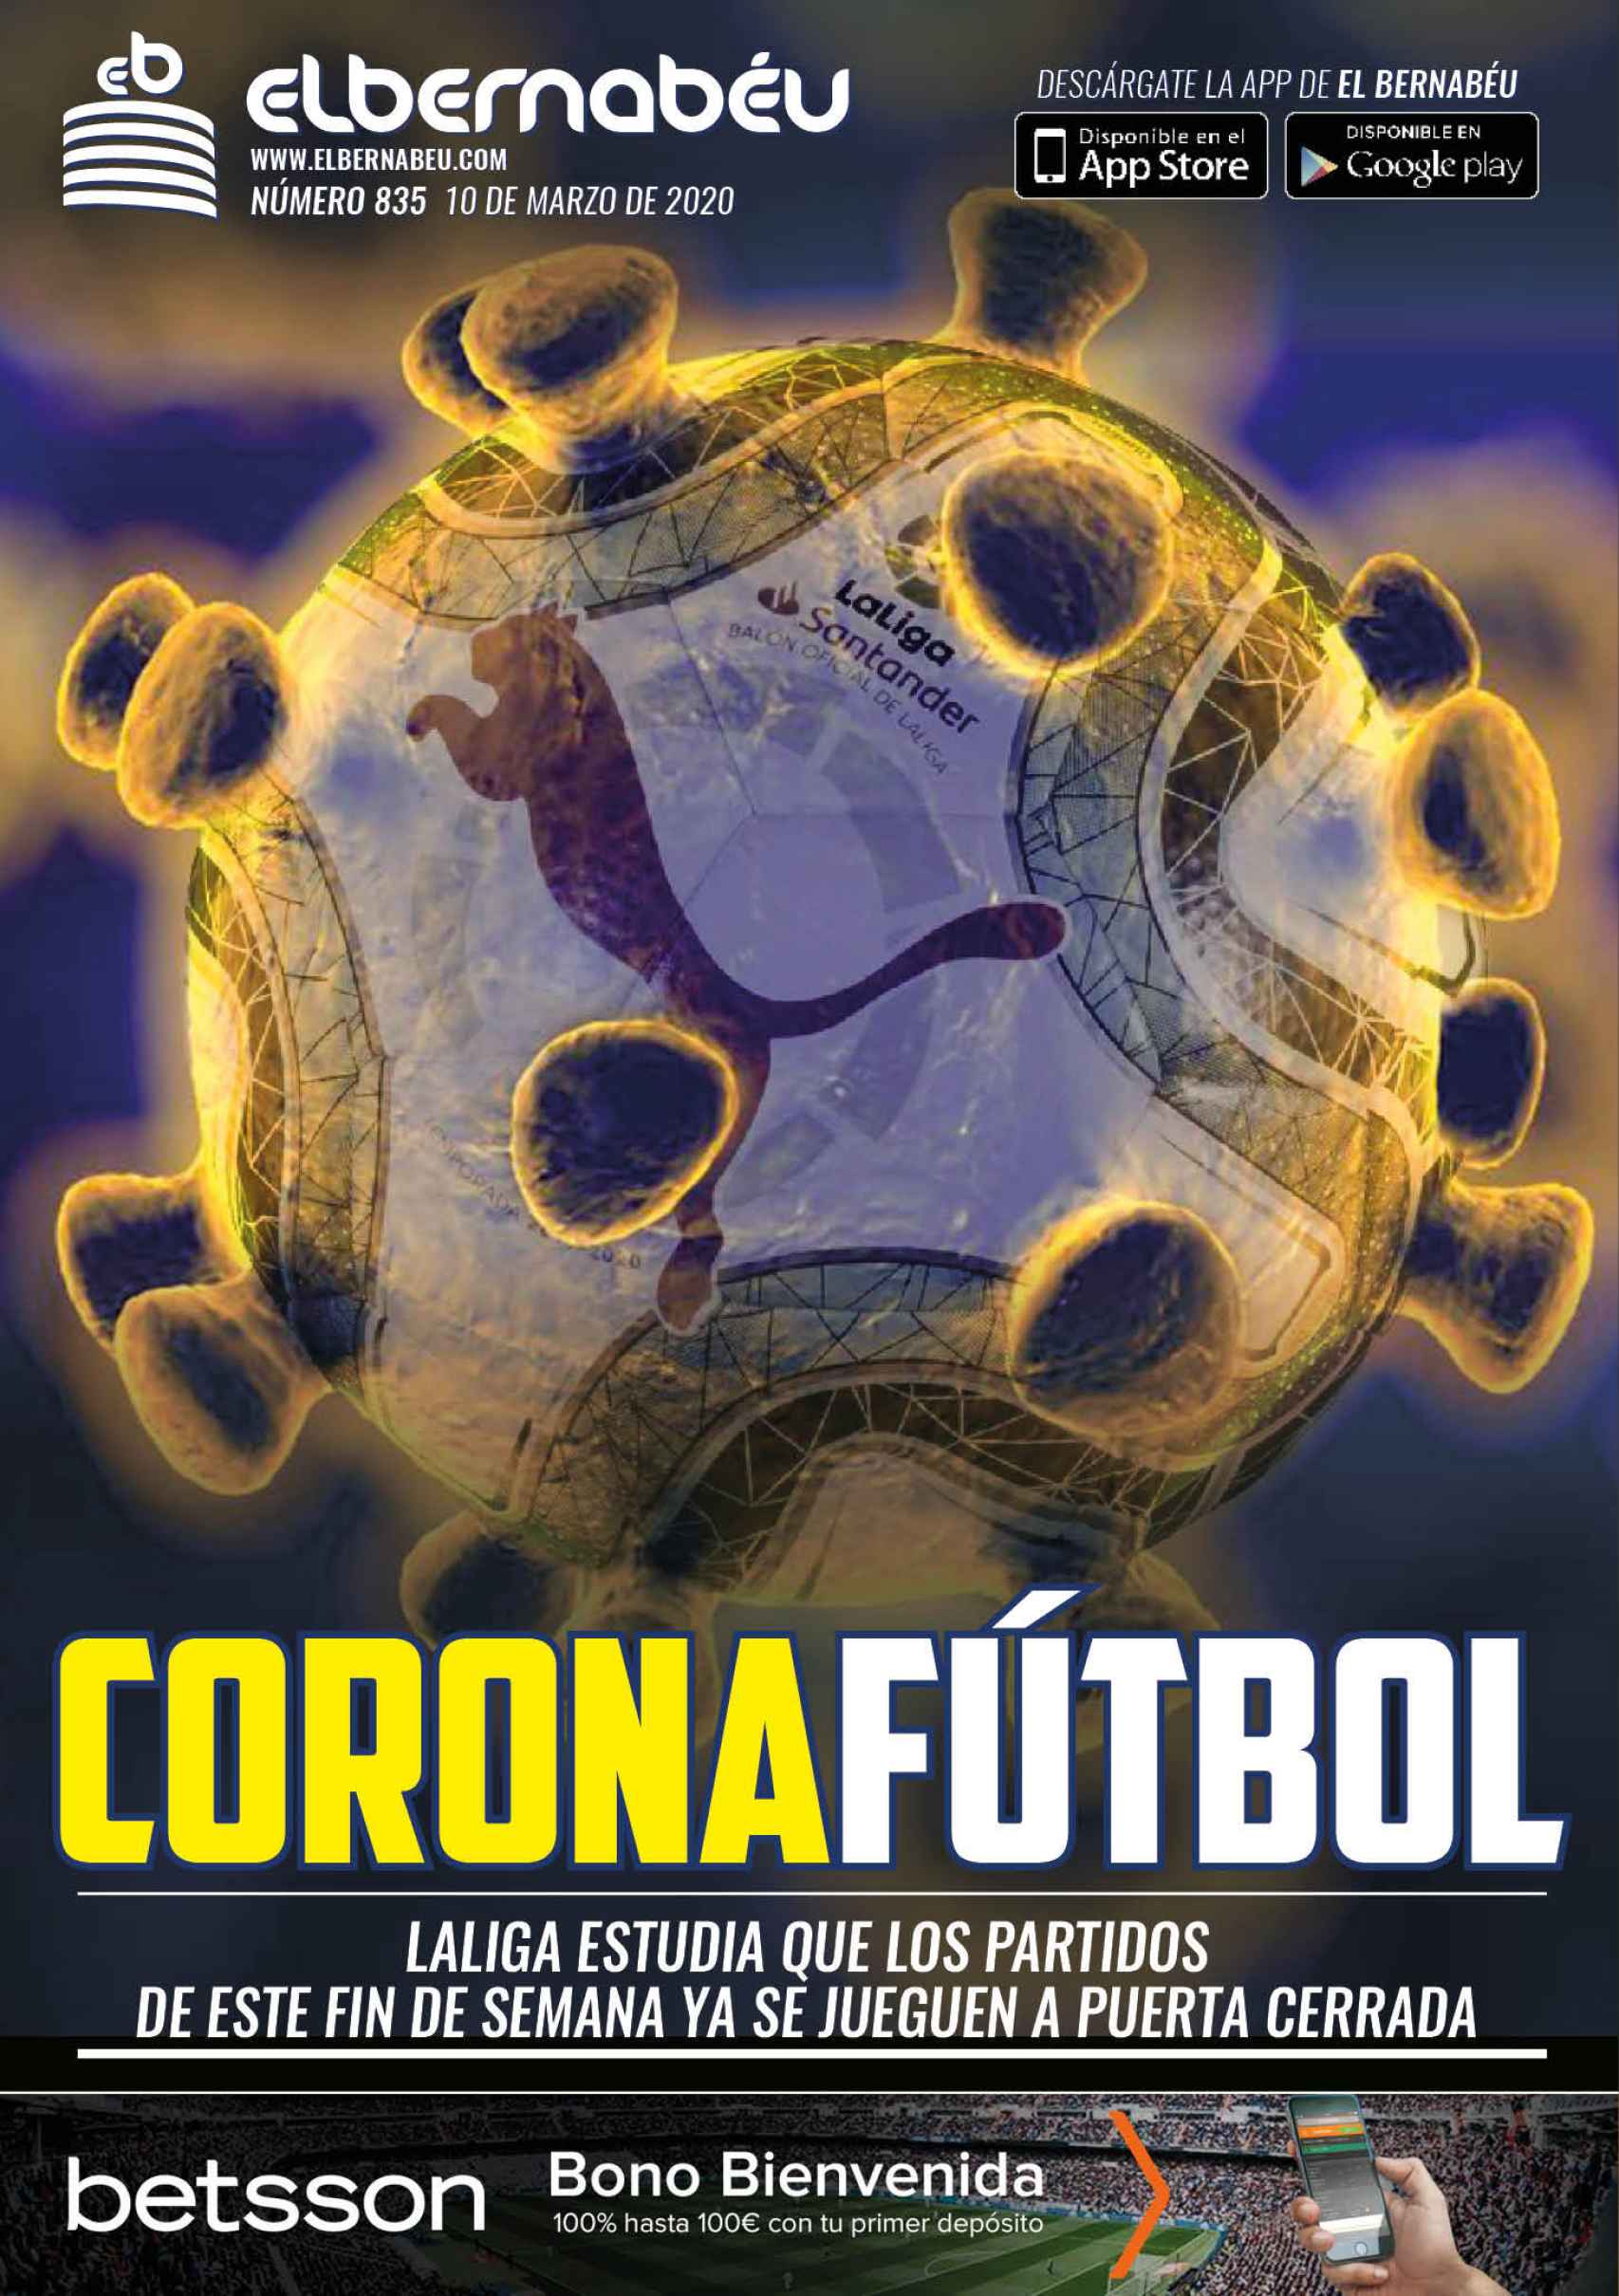 La portada de El Bernabéu (10/03/2020)